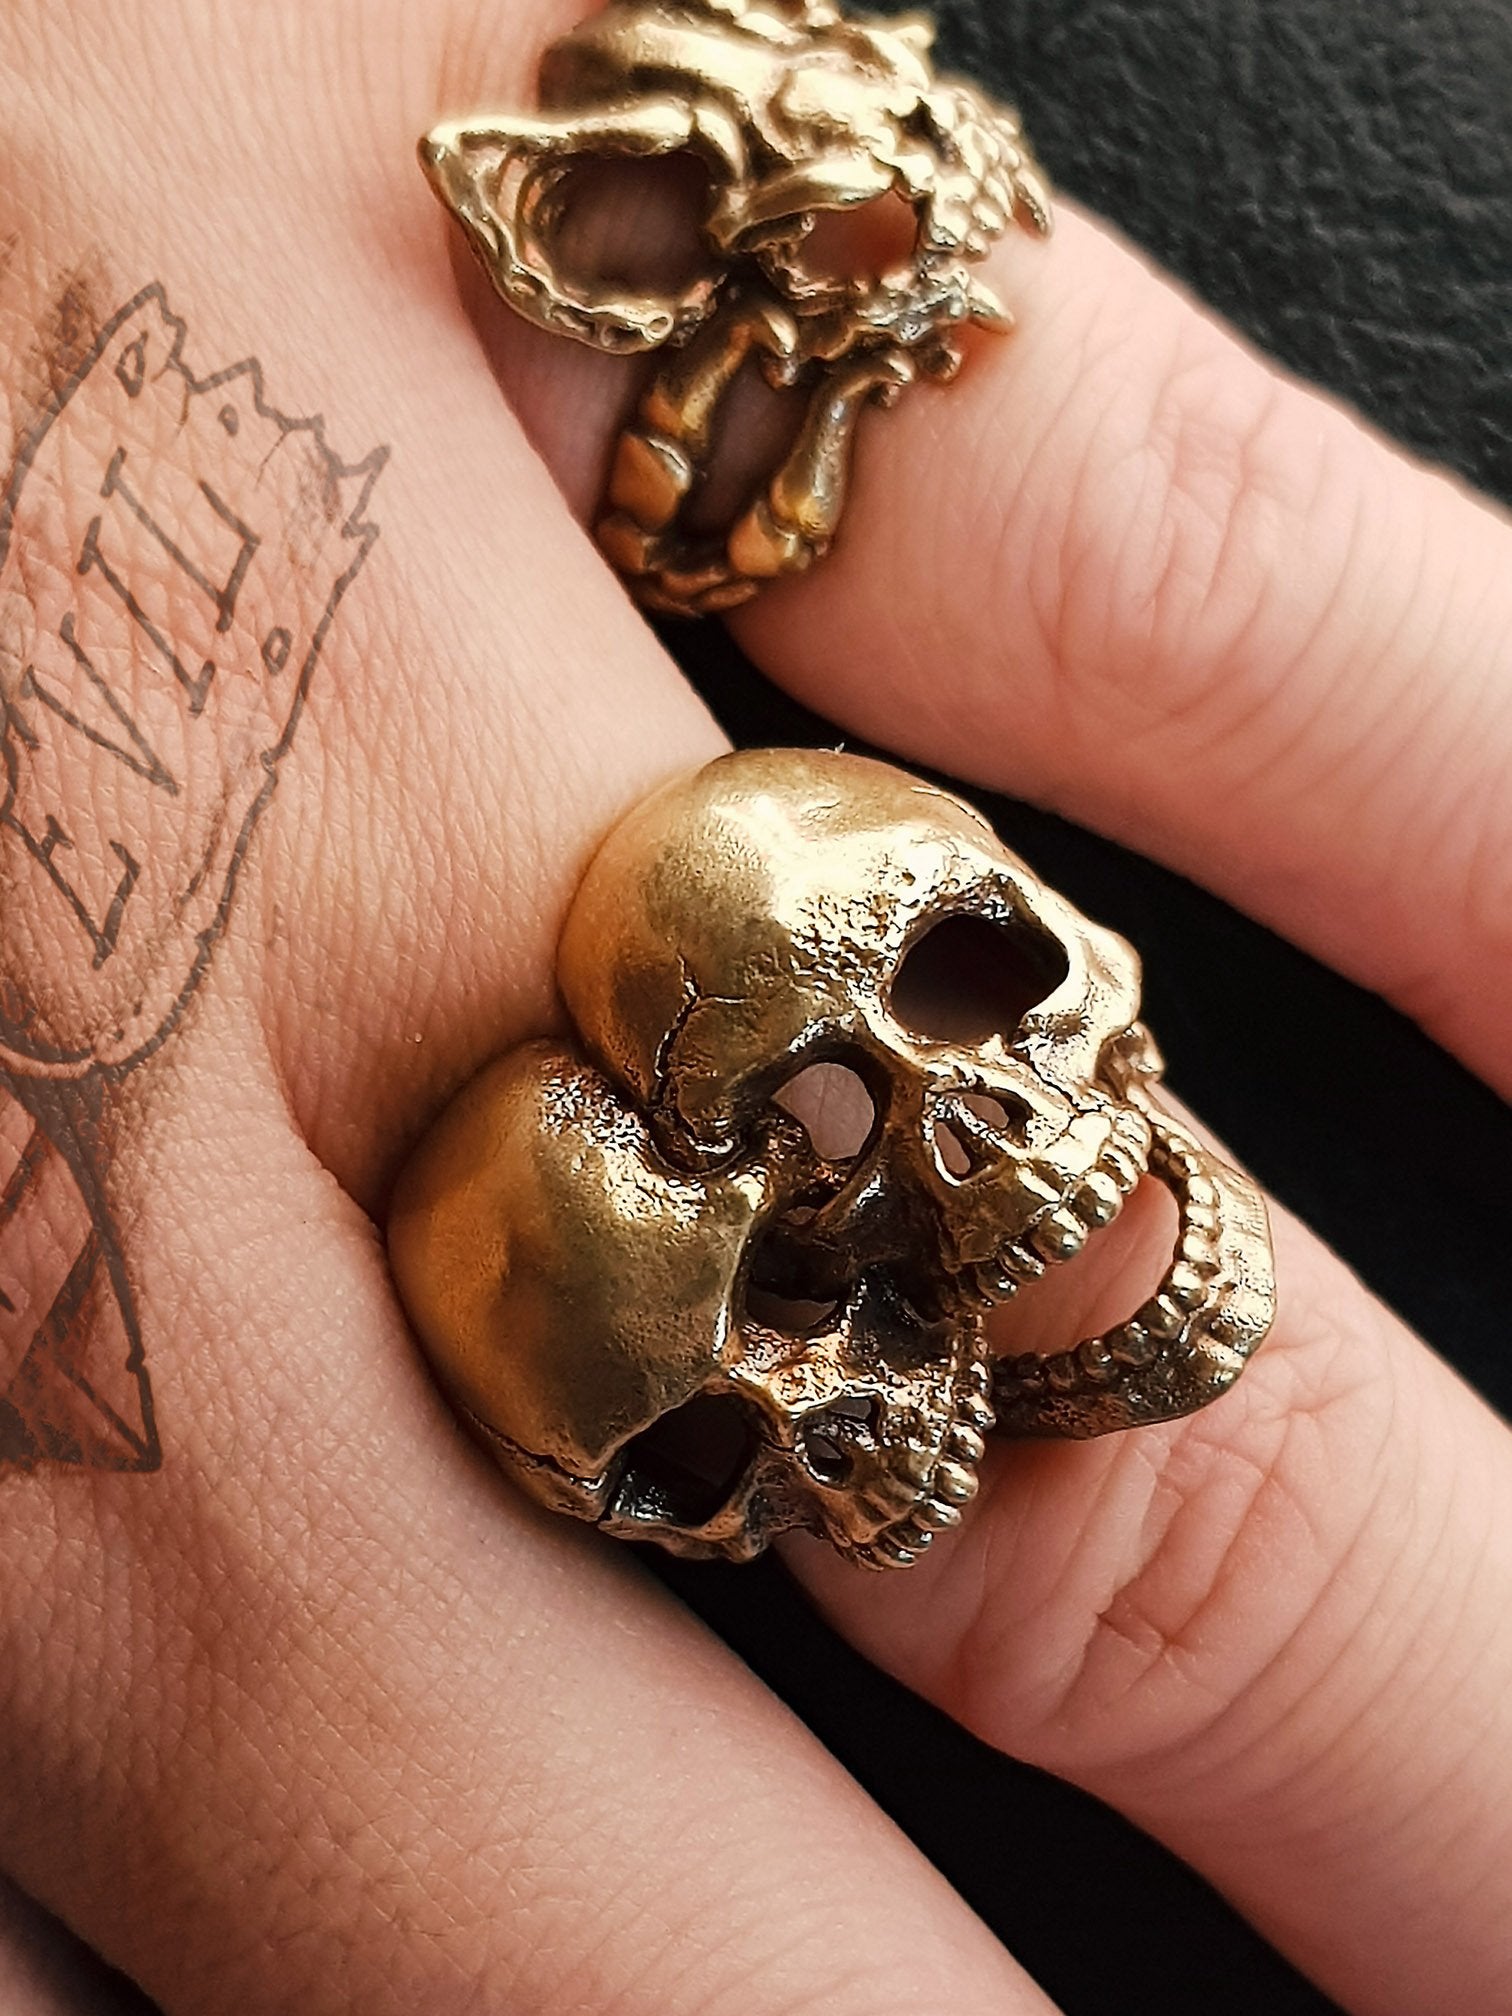 Skull Ring | Gemini Twins